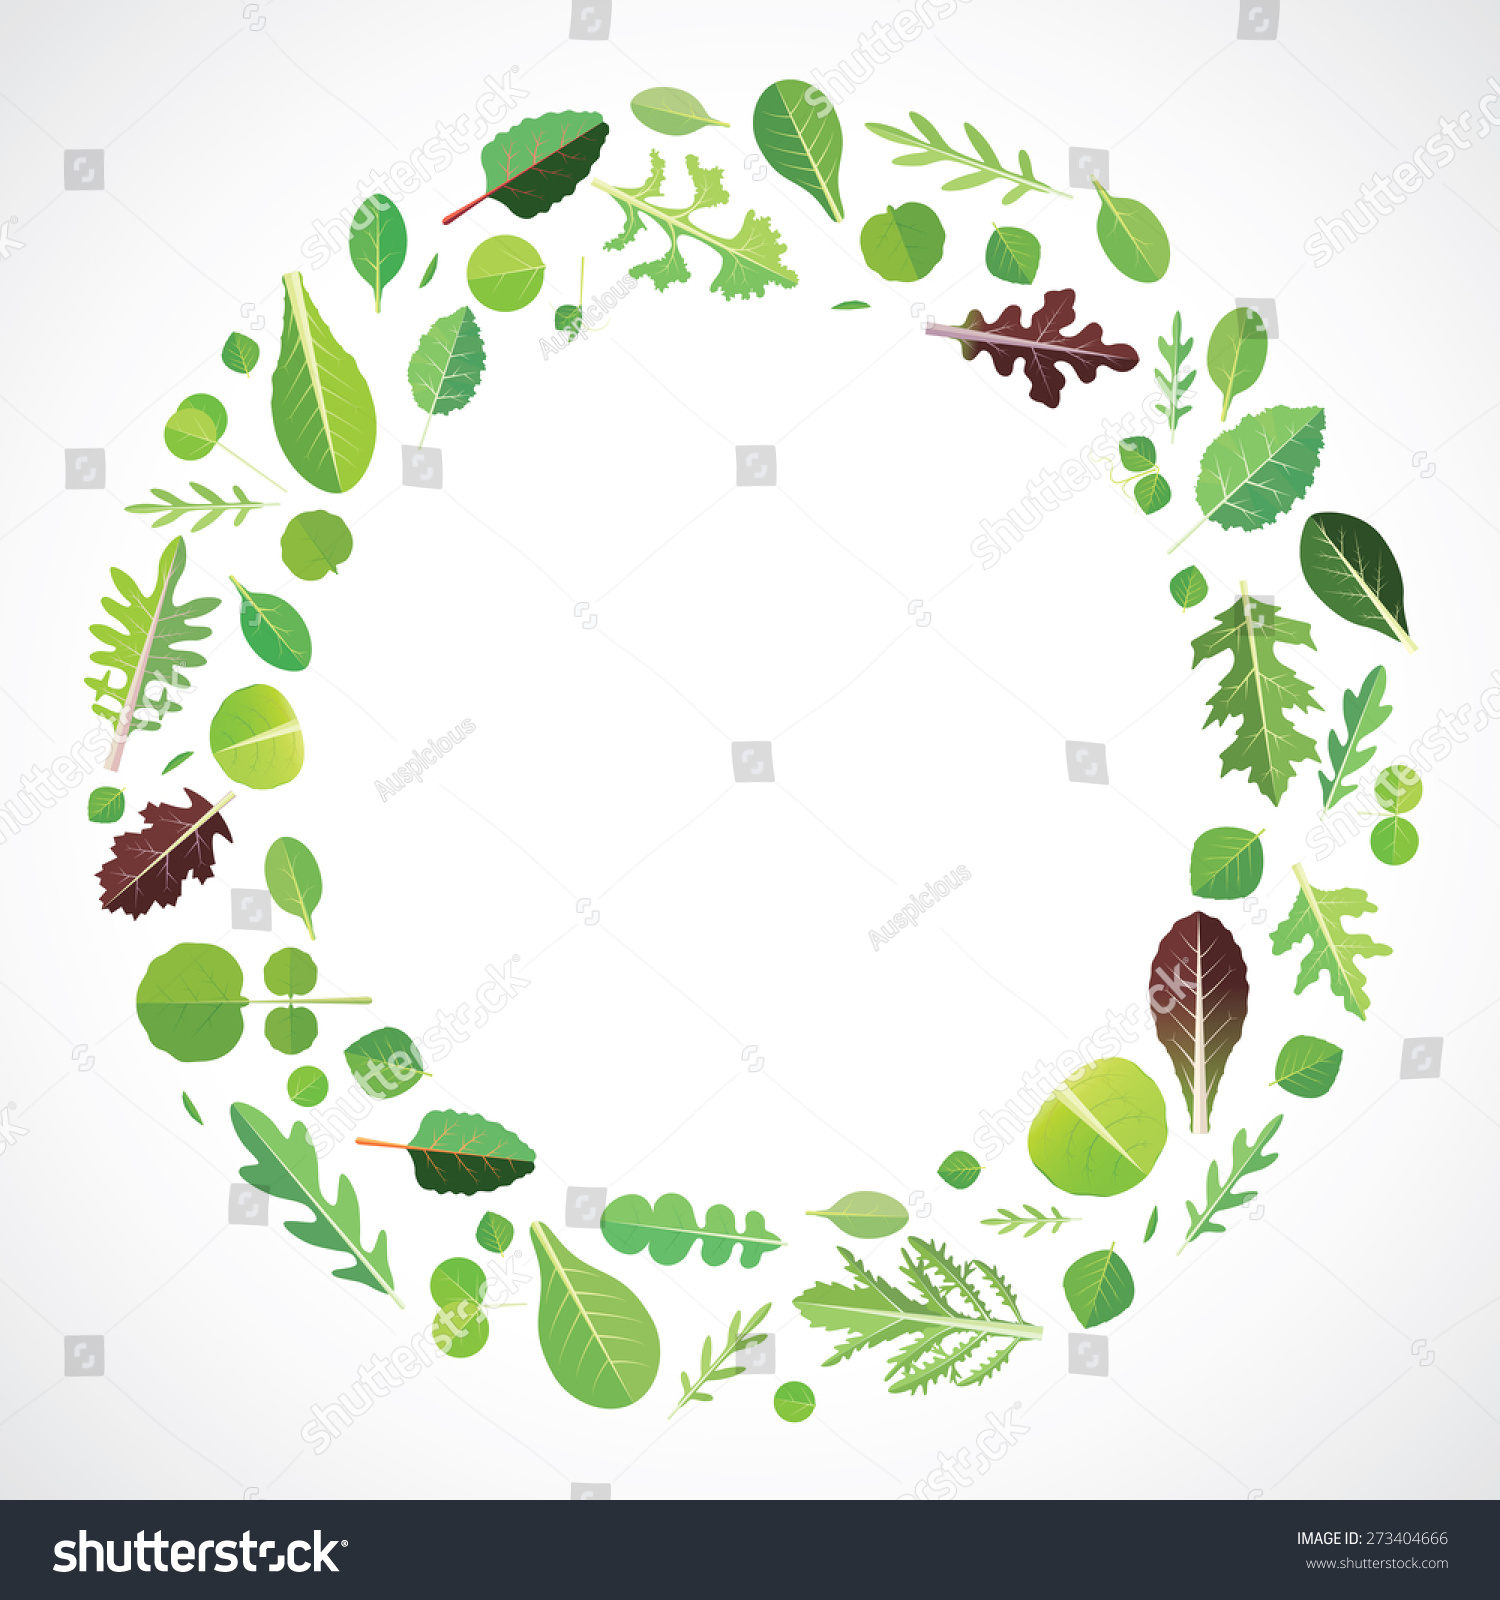 Green Leafy Background. Vector Illustration - 273404666 : Shutterstock